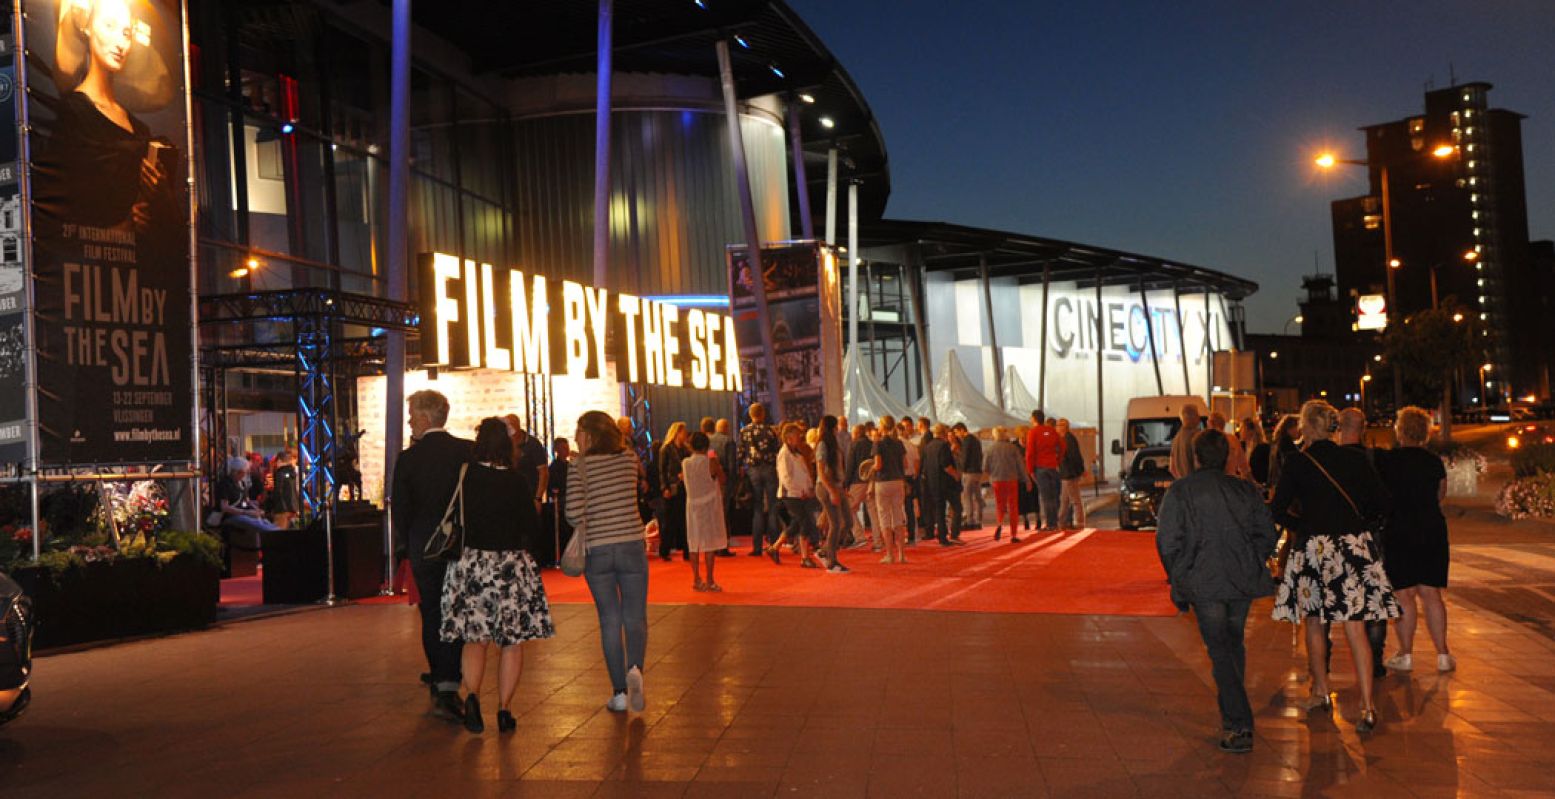 Ontdek nieuwe films tijdens Film by the Sea in Vlissingen. Foto: Triple Entertainment